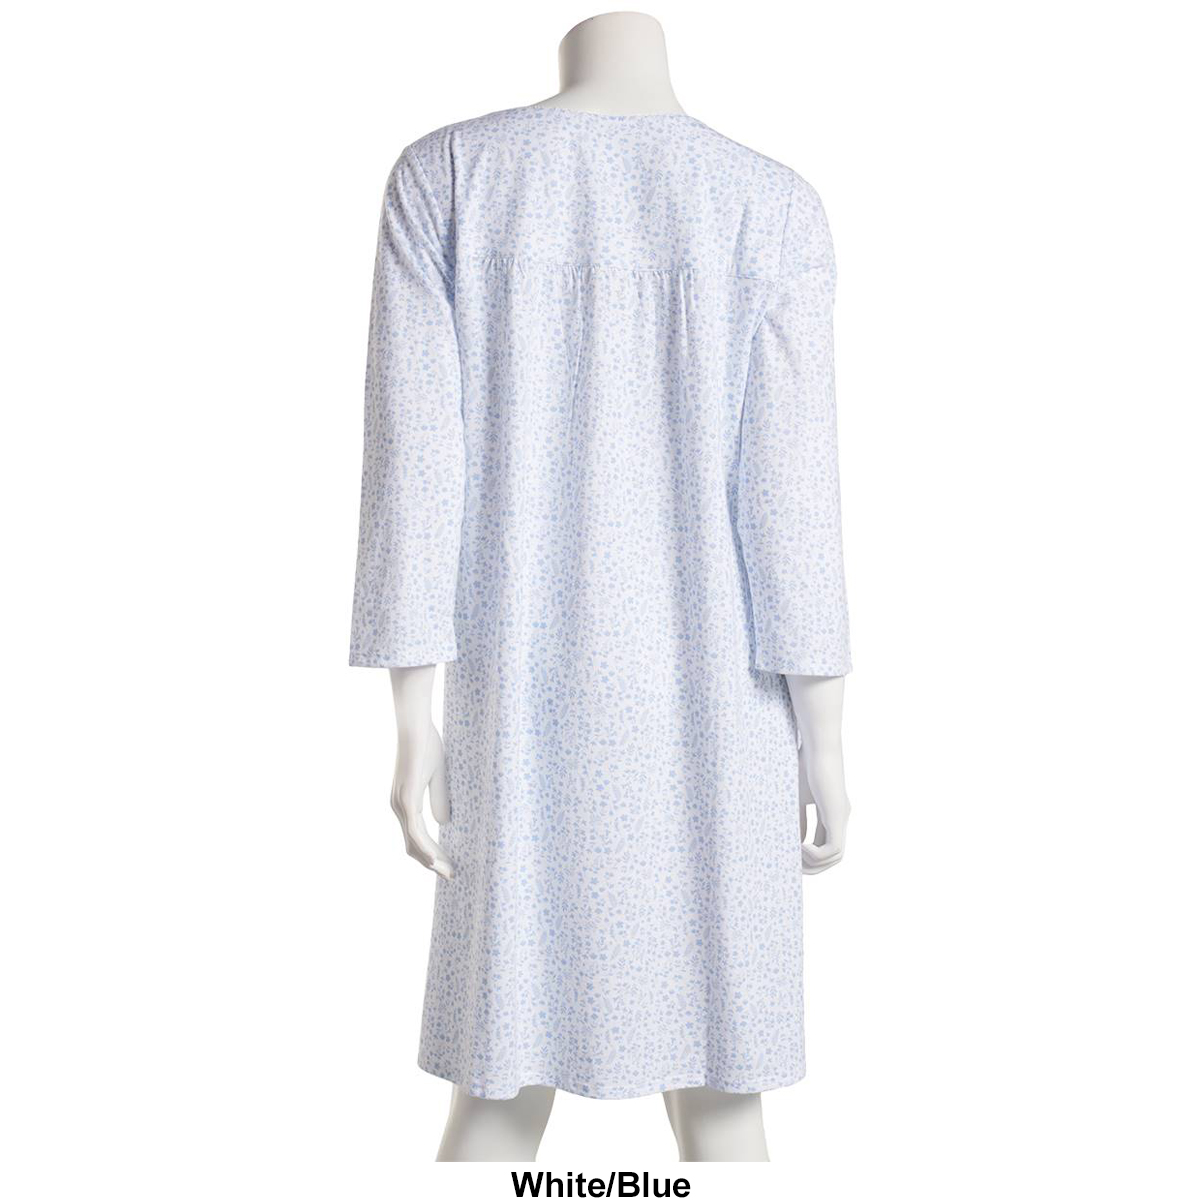 Plus Size Celestial Dreams 3/4 Sleeve Floral Waltz Nightgown